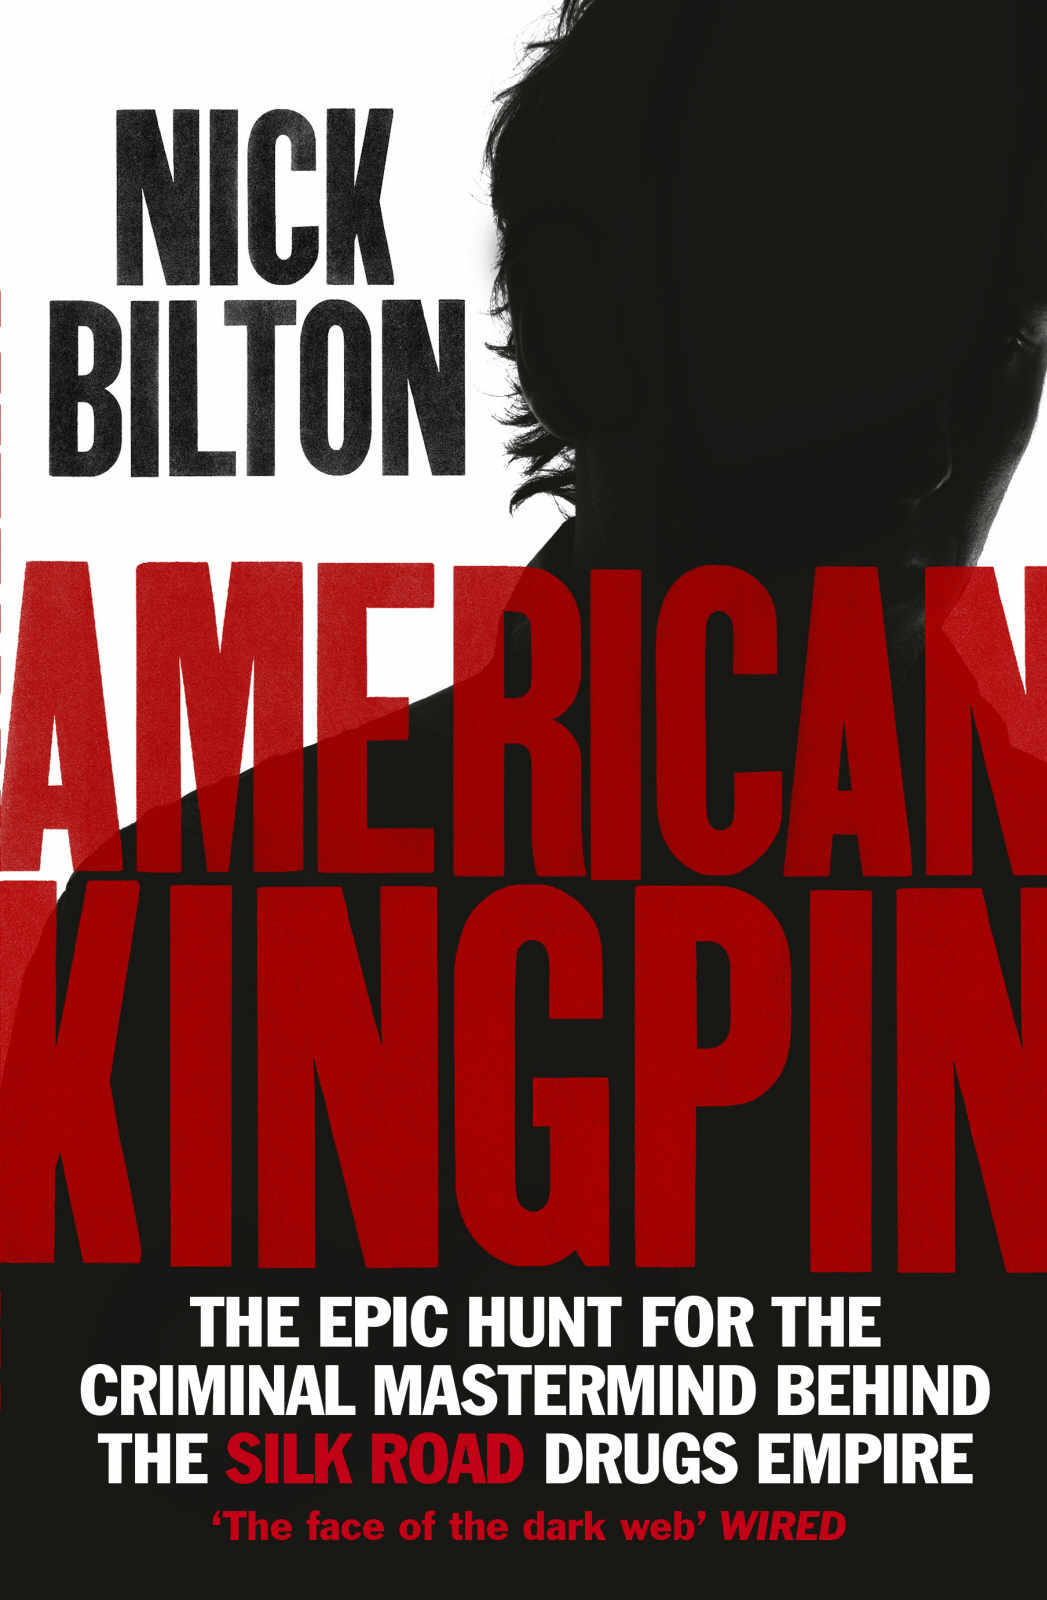 American Kingpin: Catching the Billion-Dollar Baron of the Dark Web